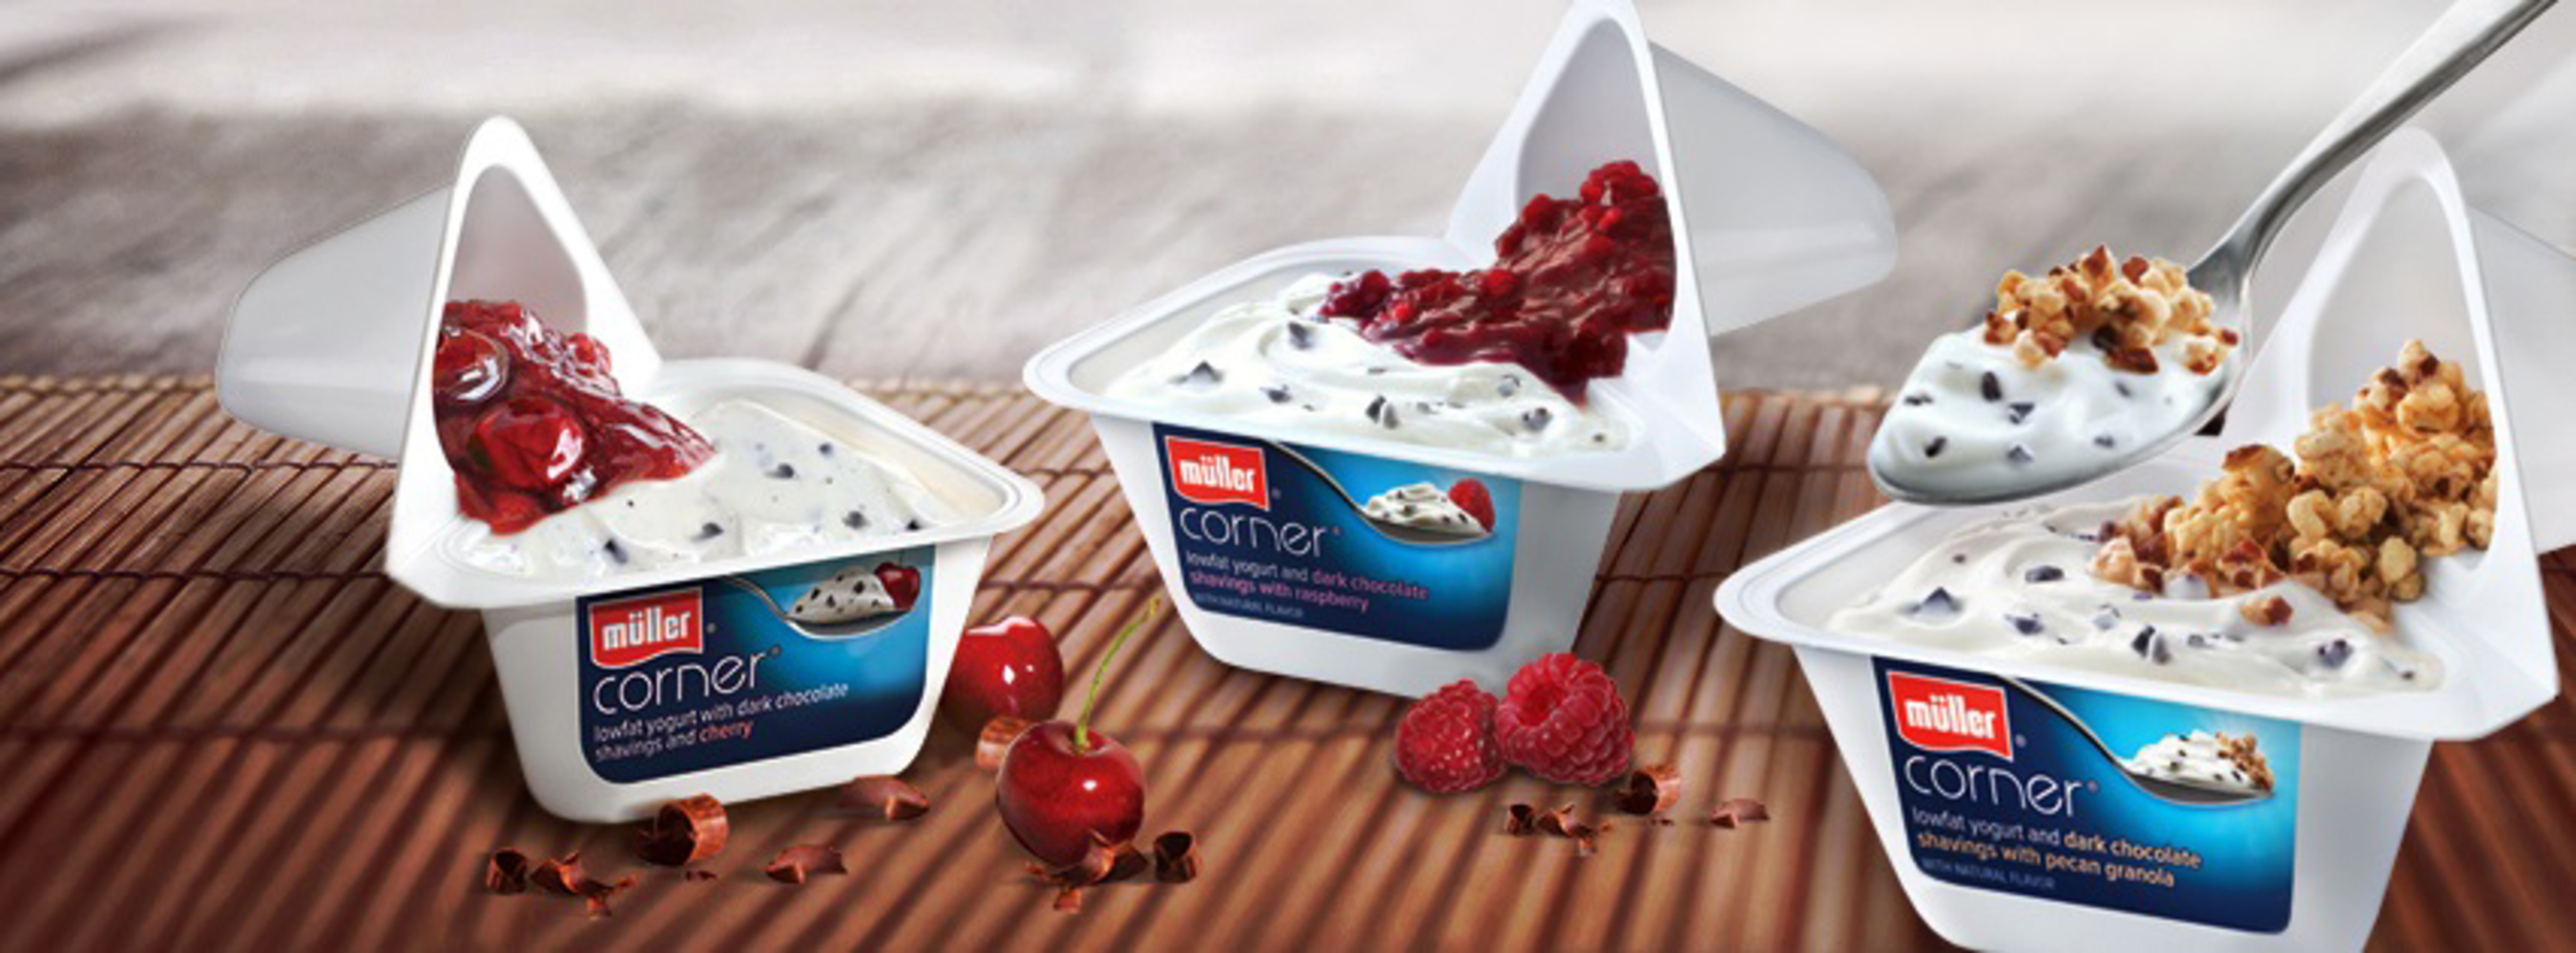 Muller yogurt introduces new Muller Corner Dark Chocolate nationwide. (PRNewsFoto/Muller Quaker Dairy) (PRNewsFoto/MULLER QUAKER DAIRY)